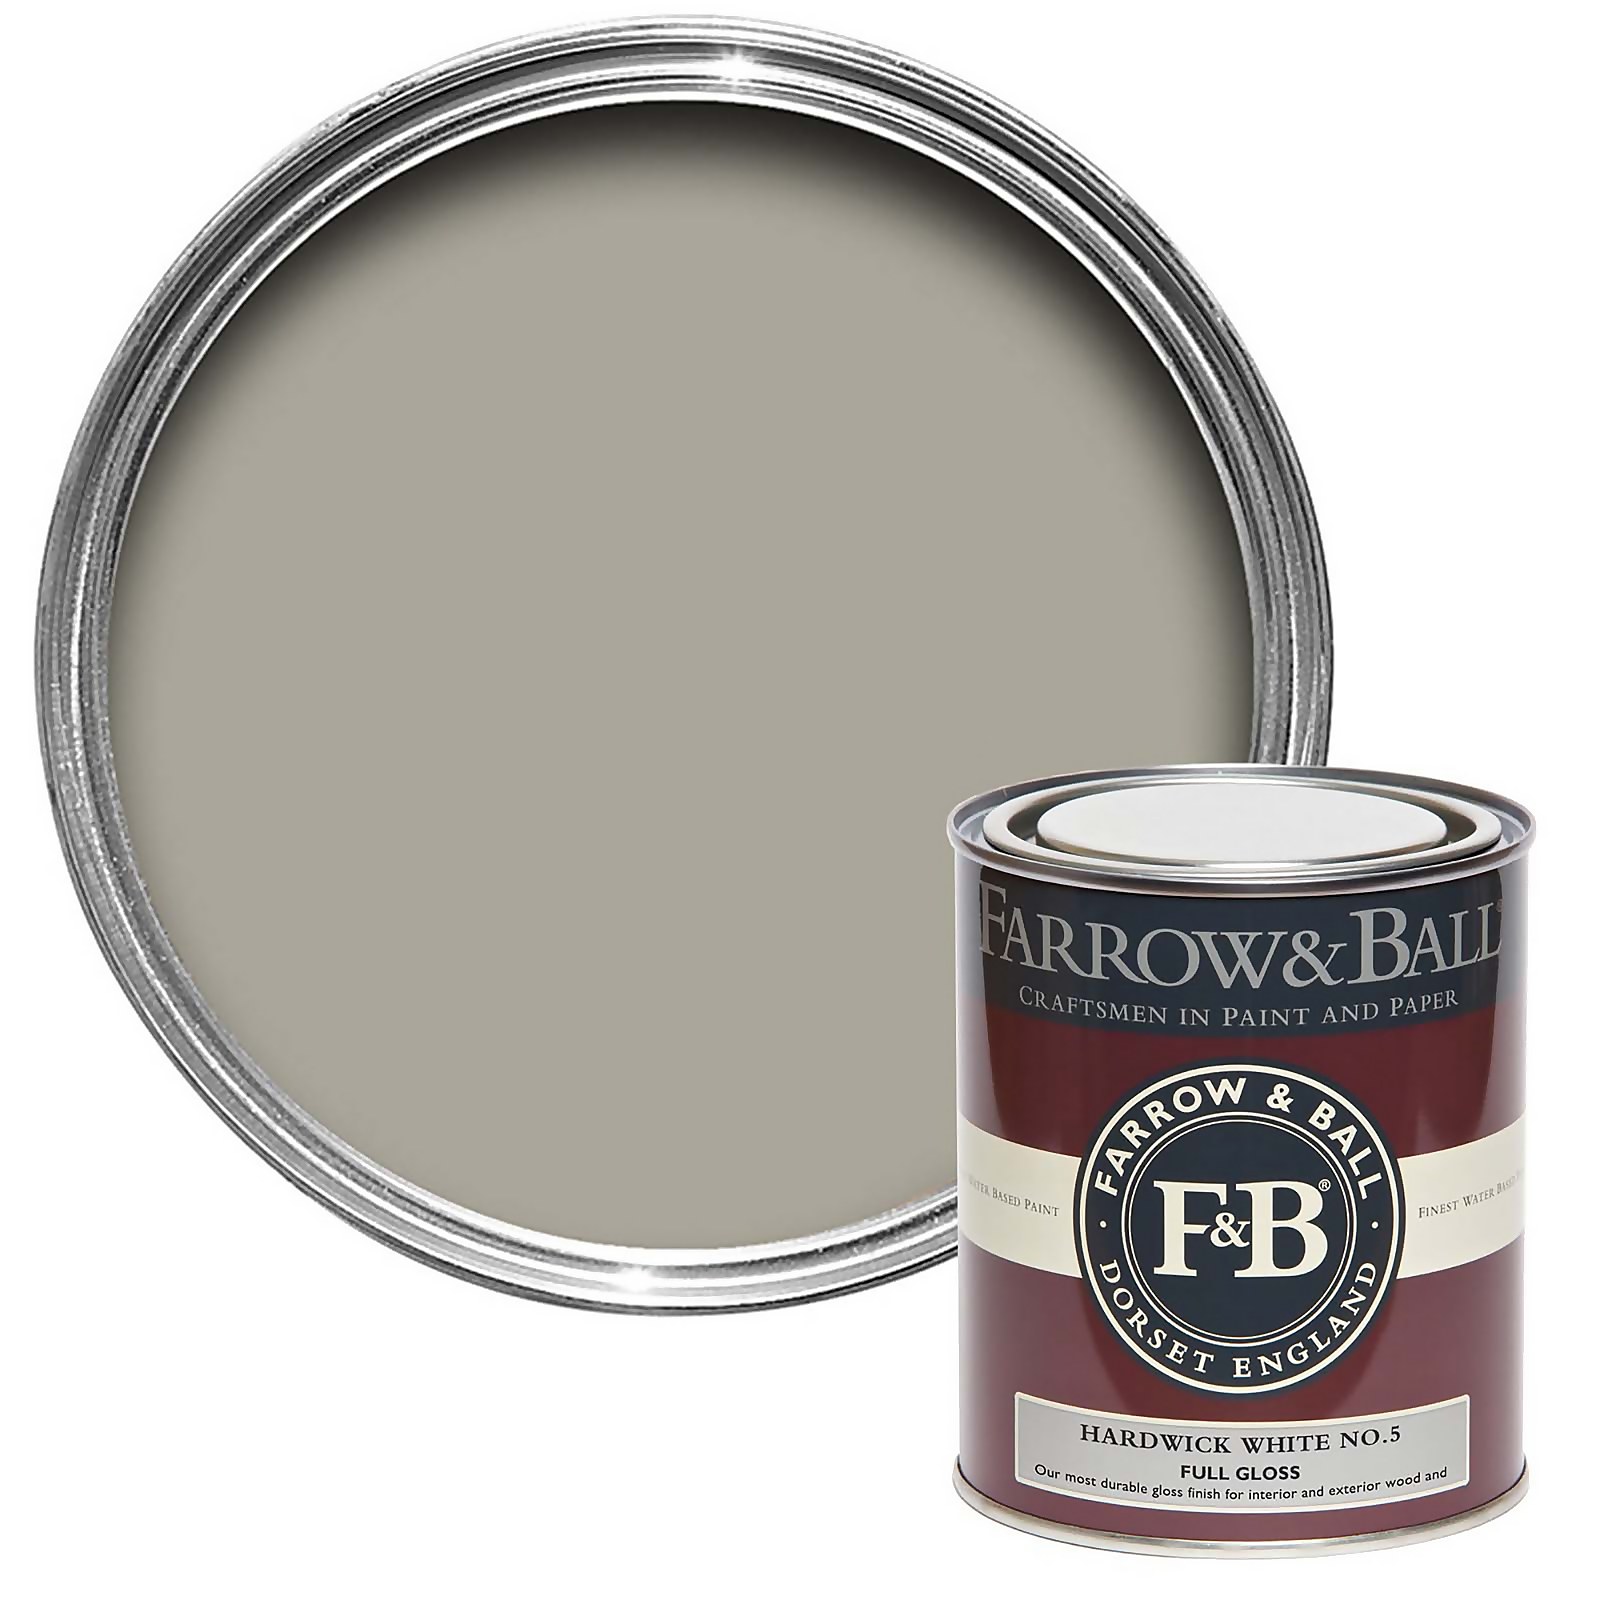 Farrow & Ball Full Gloss Paint Hardwick White No.5 - 750ml